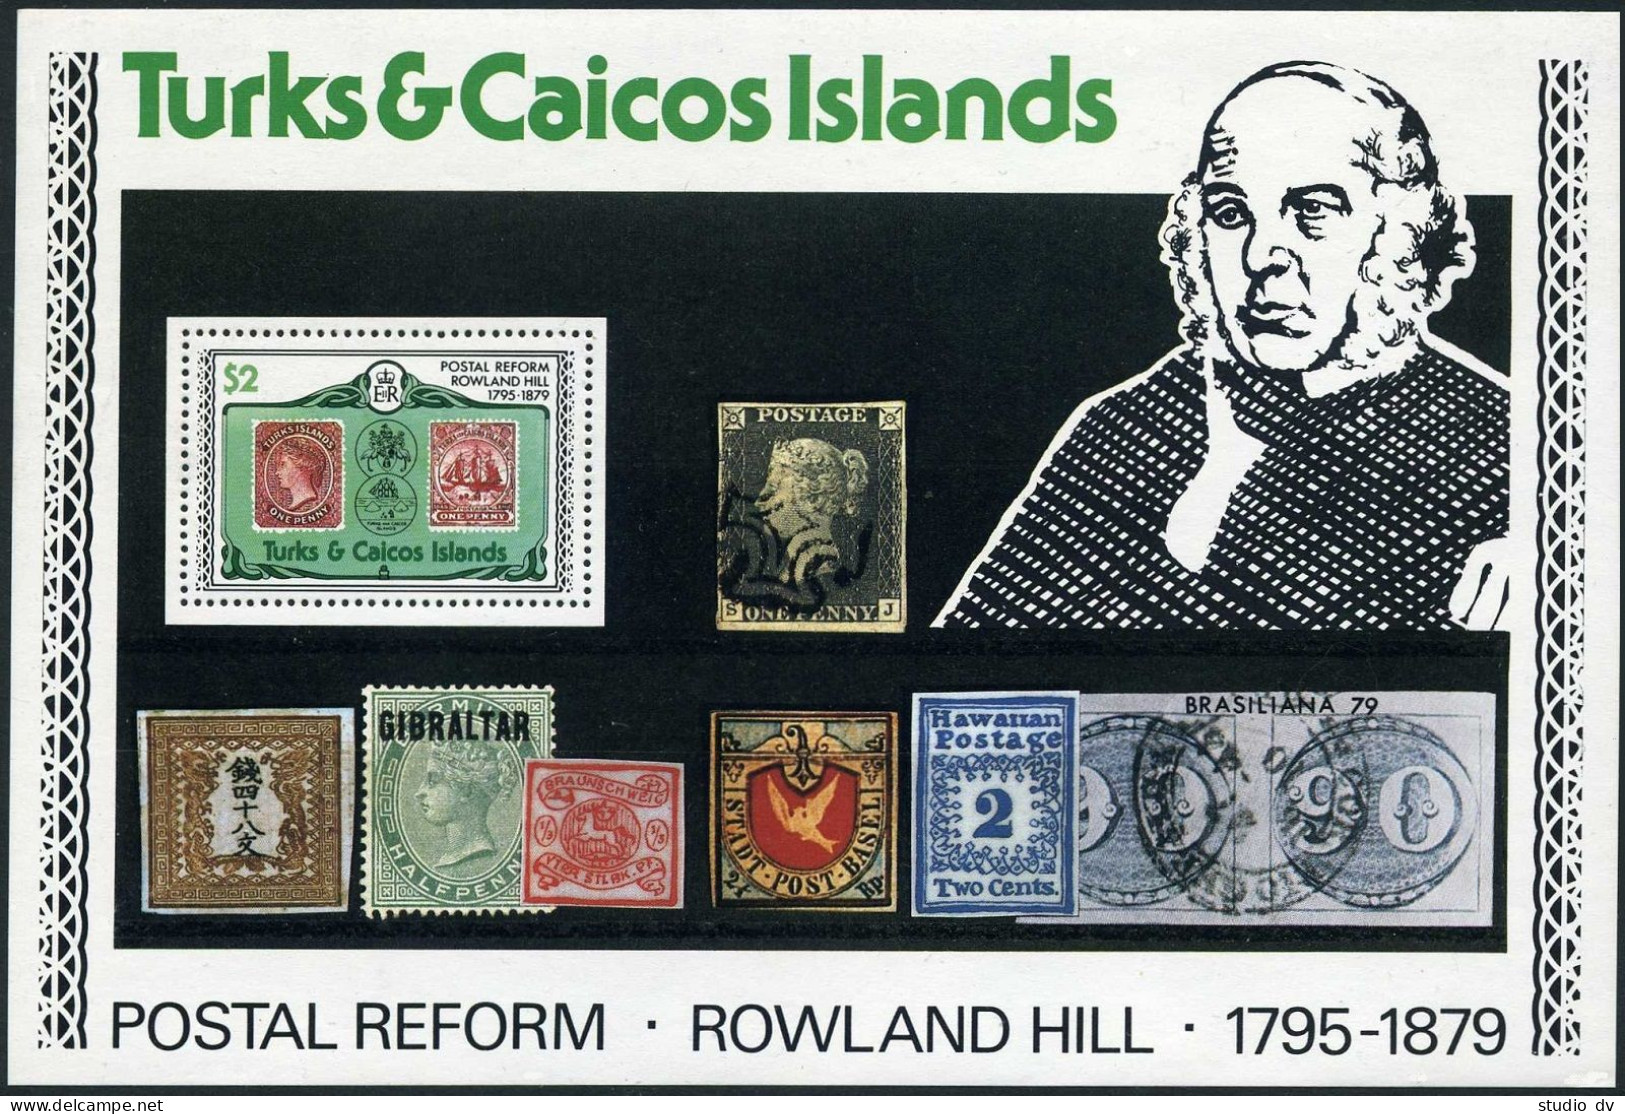 Turks & Caicos 396a Sheet, MNH. Mi Bl.16. Sir Rowland Hill 1979. Stamps, Ships. - Turks & Caicos